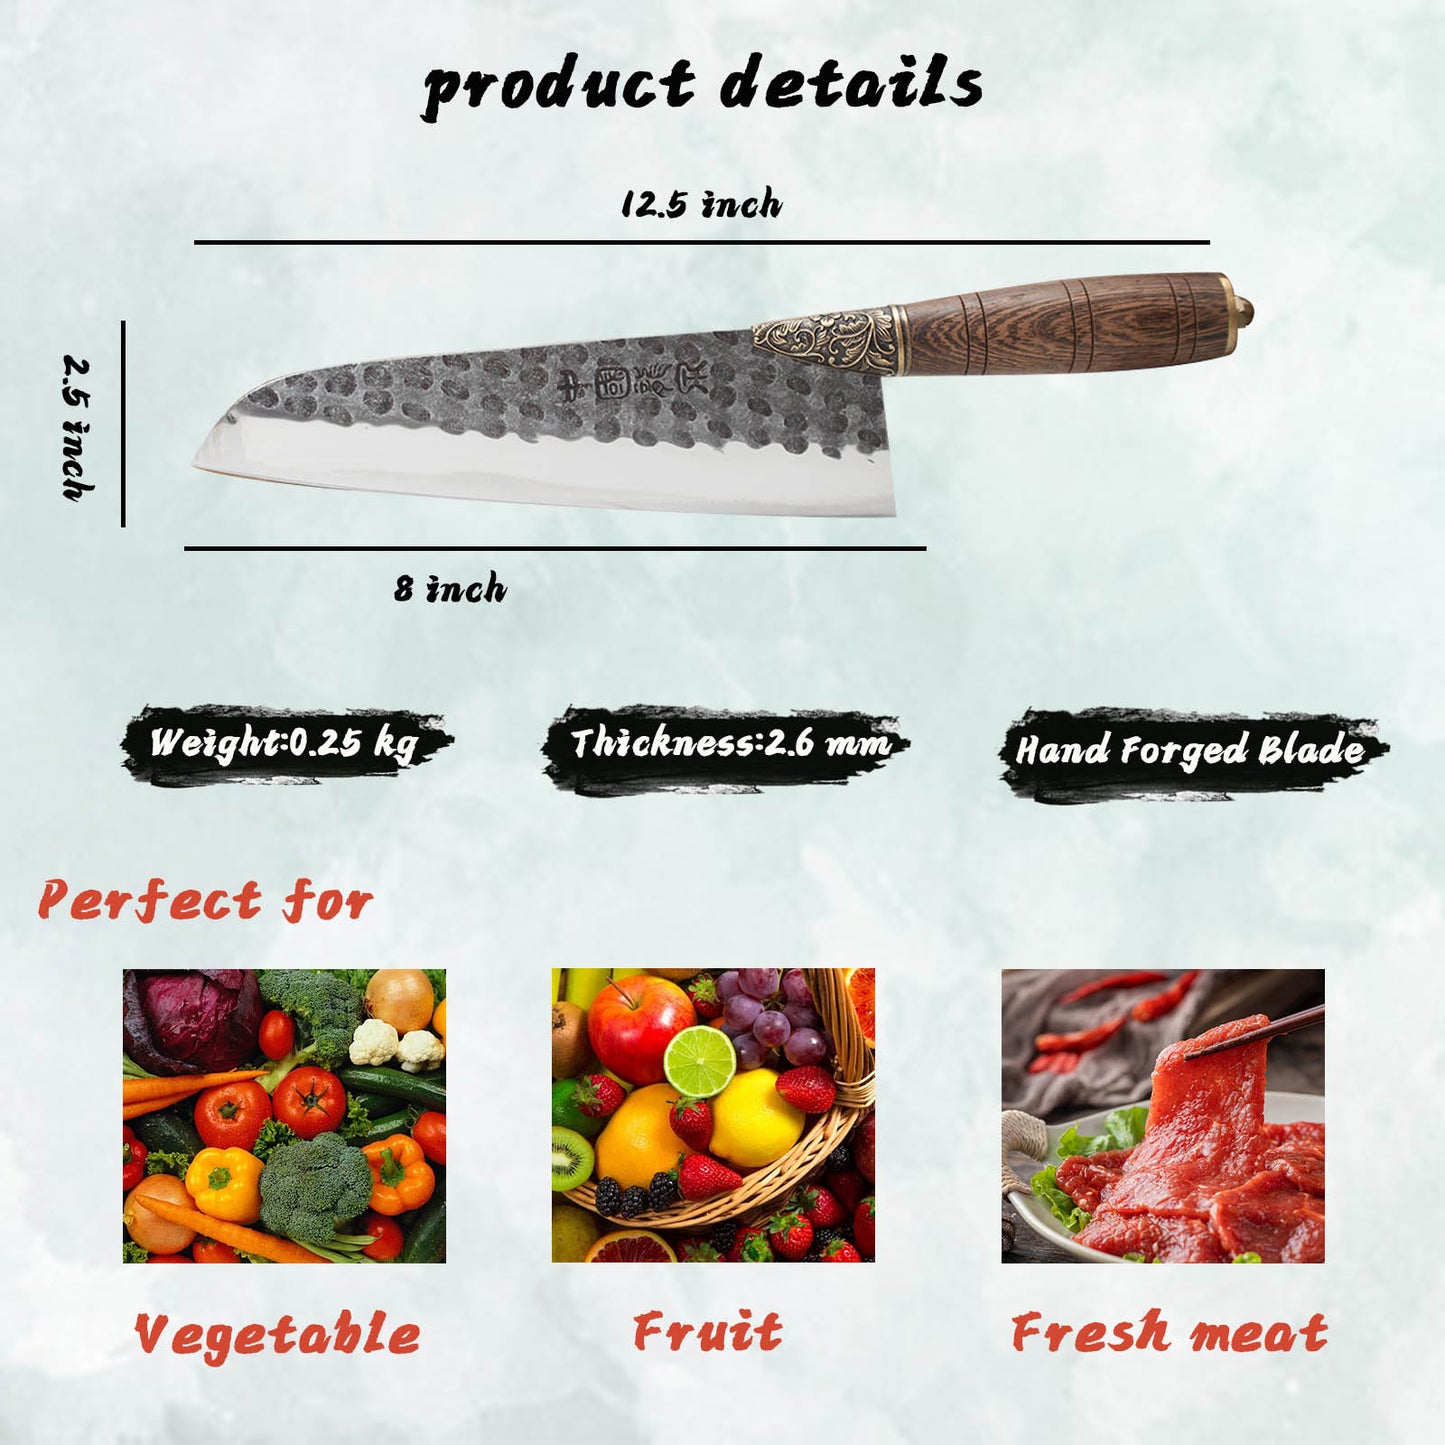 Long Quan Handmade Santoku Knife 8 Inch 9Cr18Mov Steel Pear Wood Handle With Gift Box